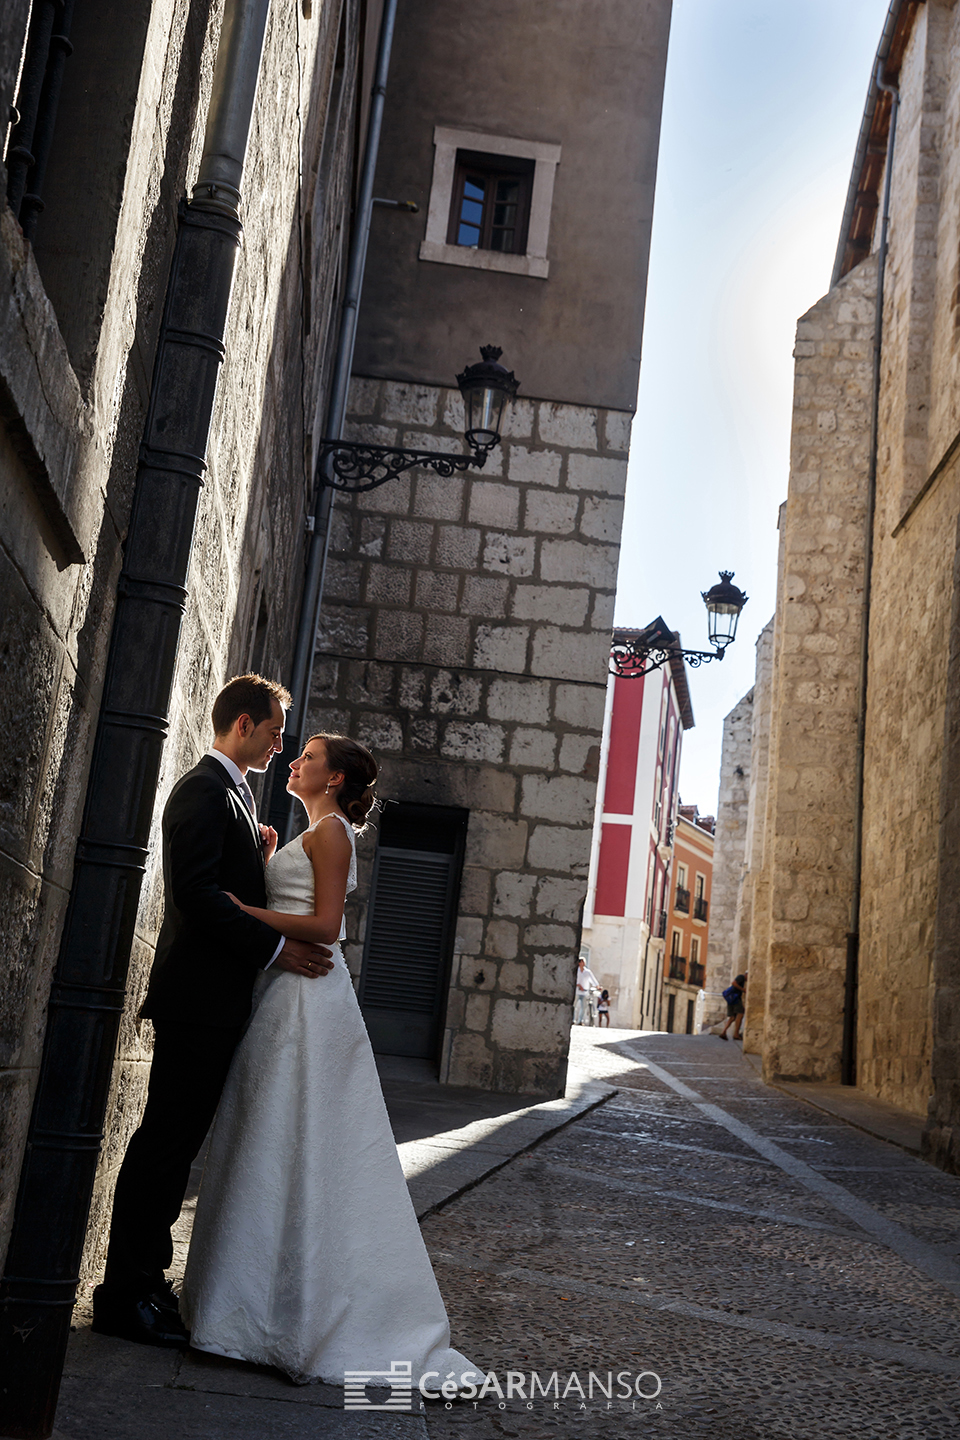 César Manso Fotógrafo: Fotógrafos de boda en Burgos - Boda%20AlejandrayJairo-28.JPG